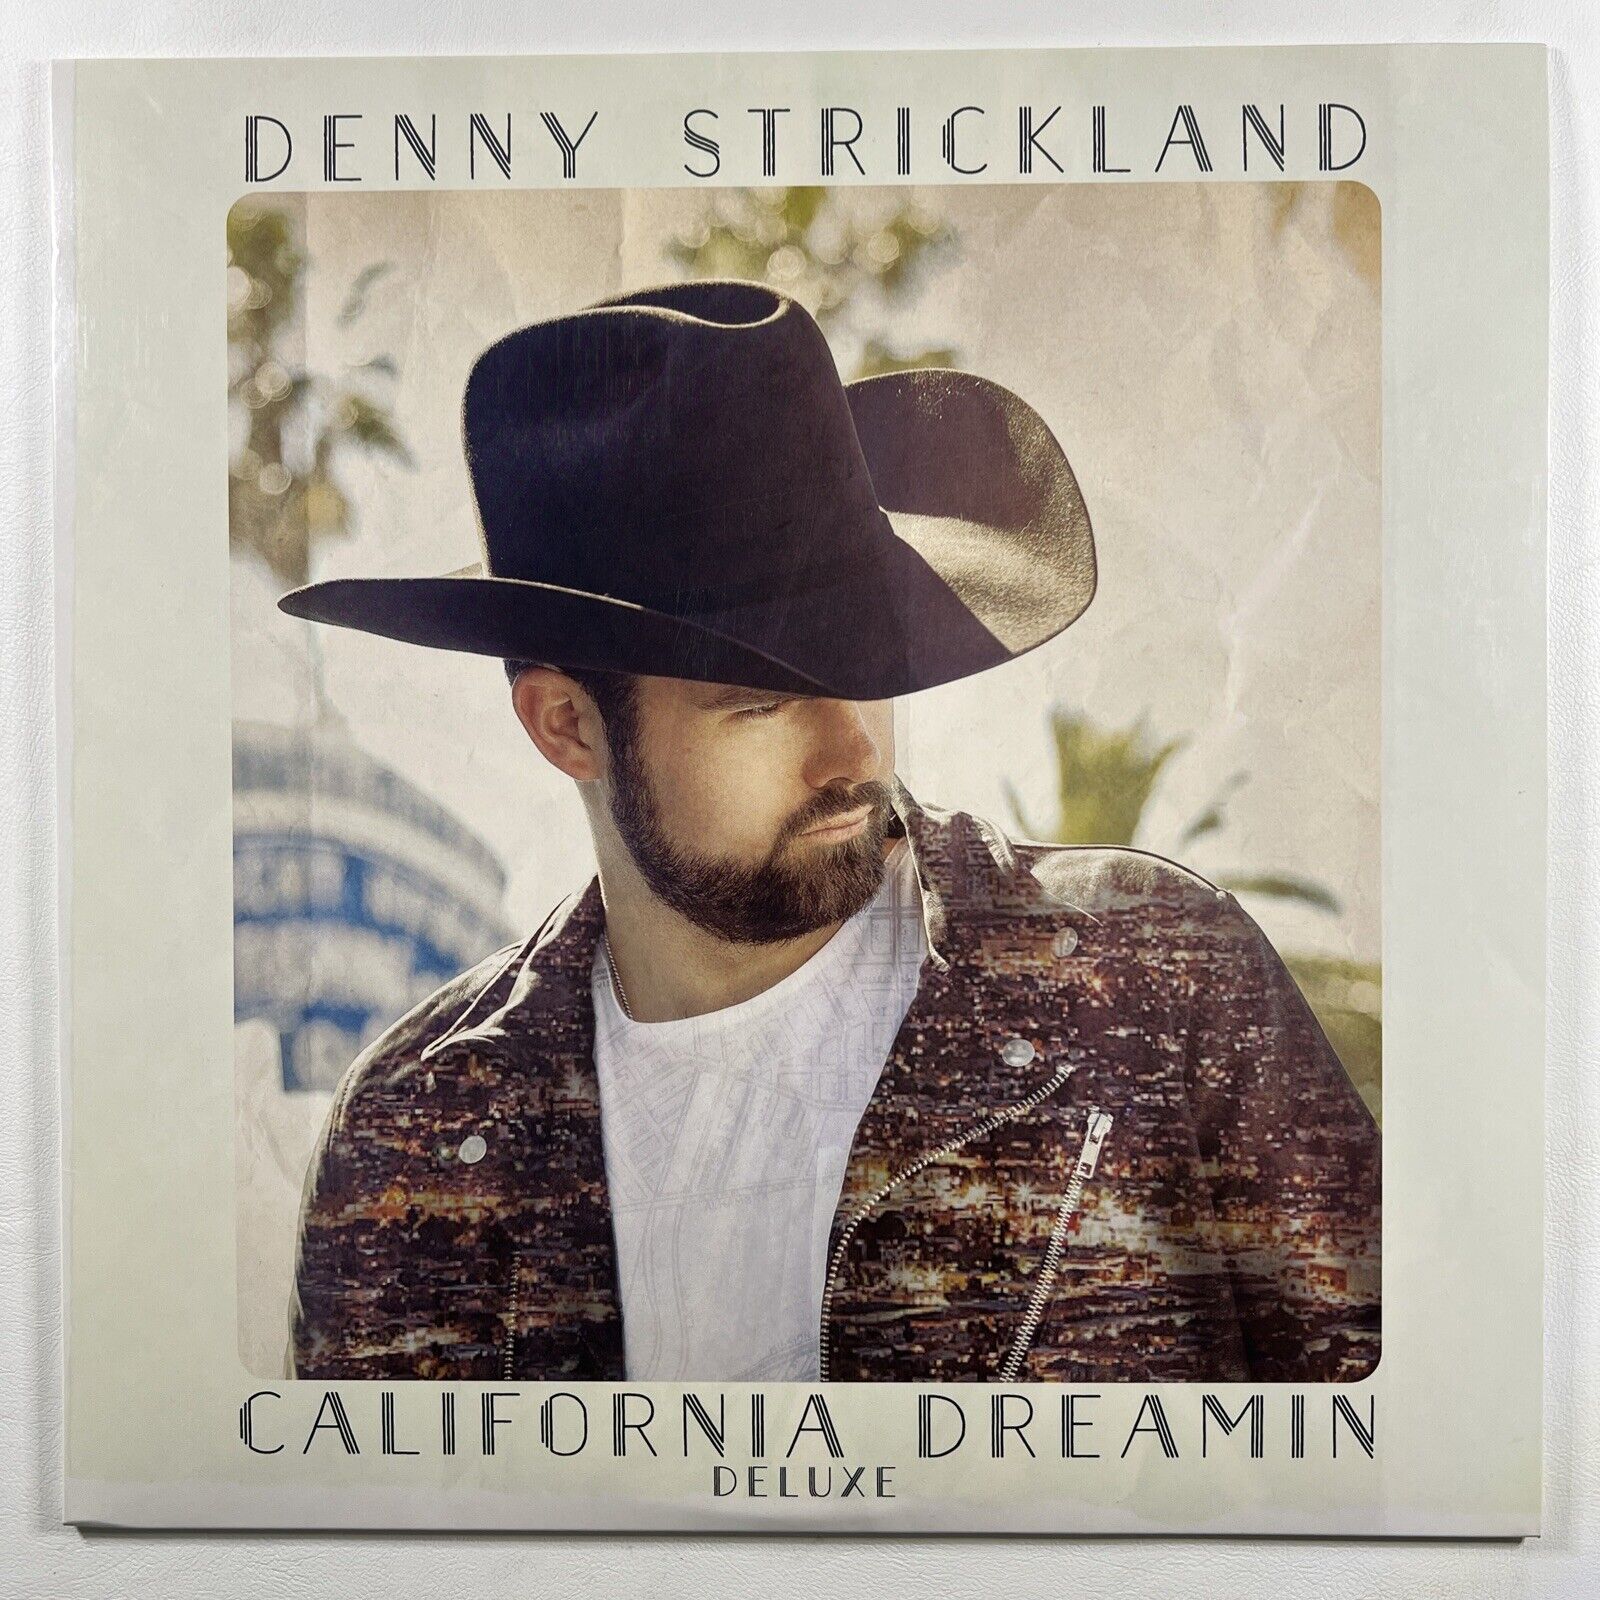 Denny Strickland “California Dreamin Deluxe” LP/Red Star Prod. (EX) Green 2018